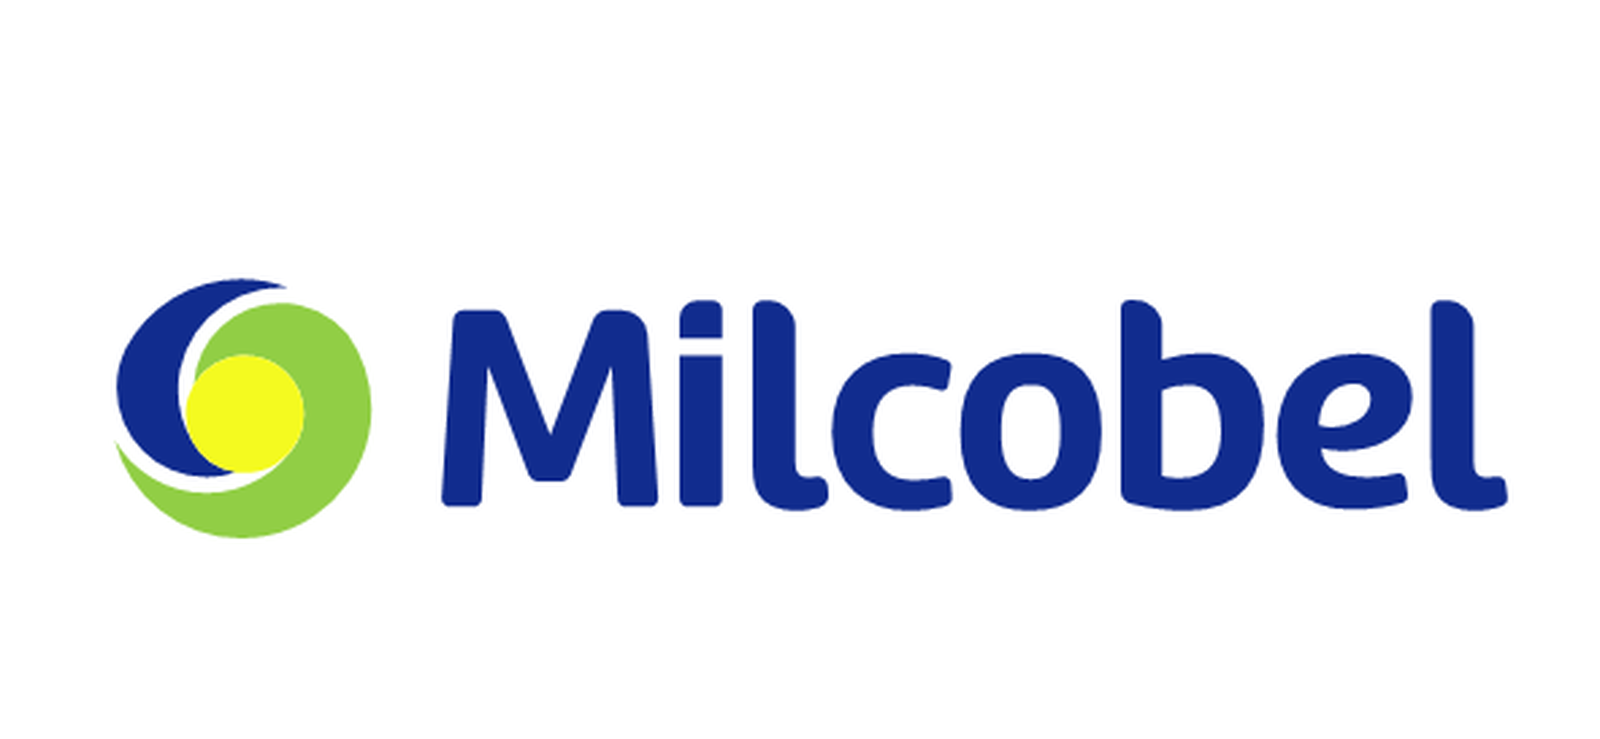 Milcobel logo.png